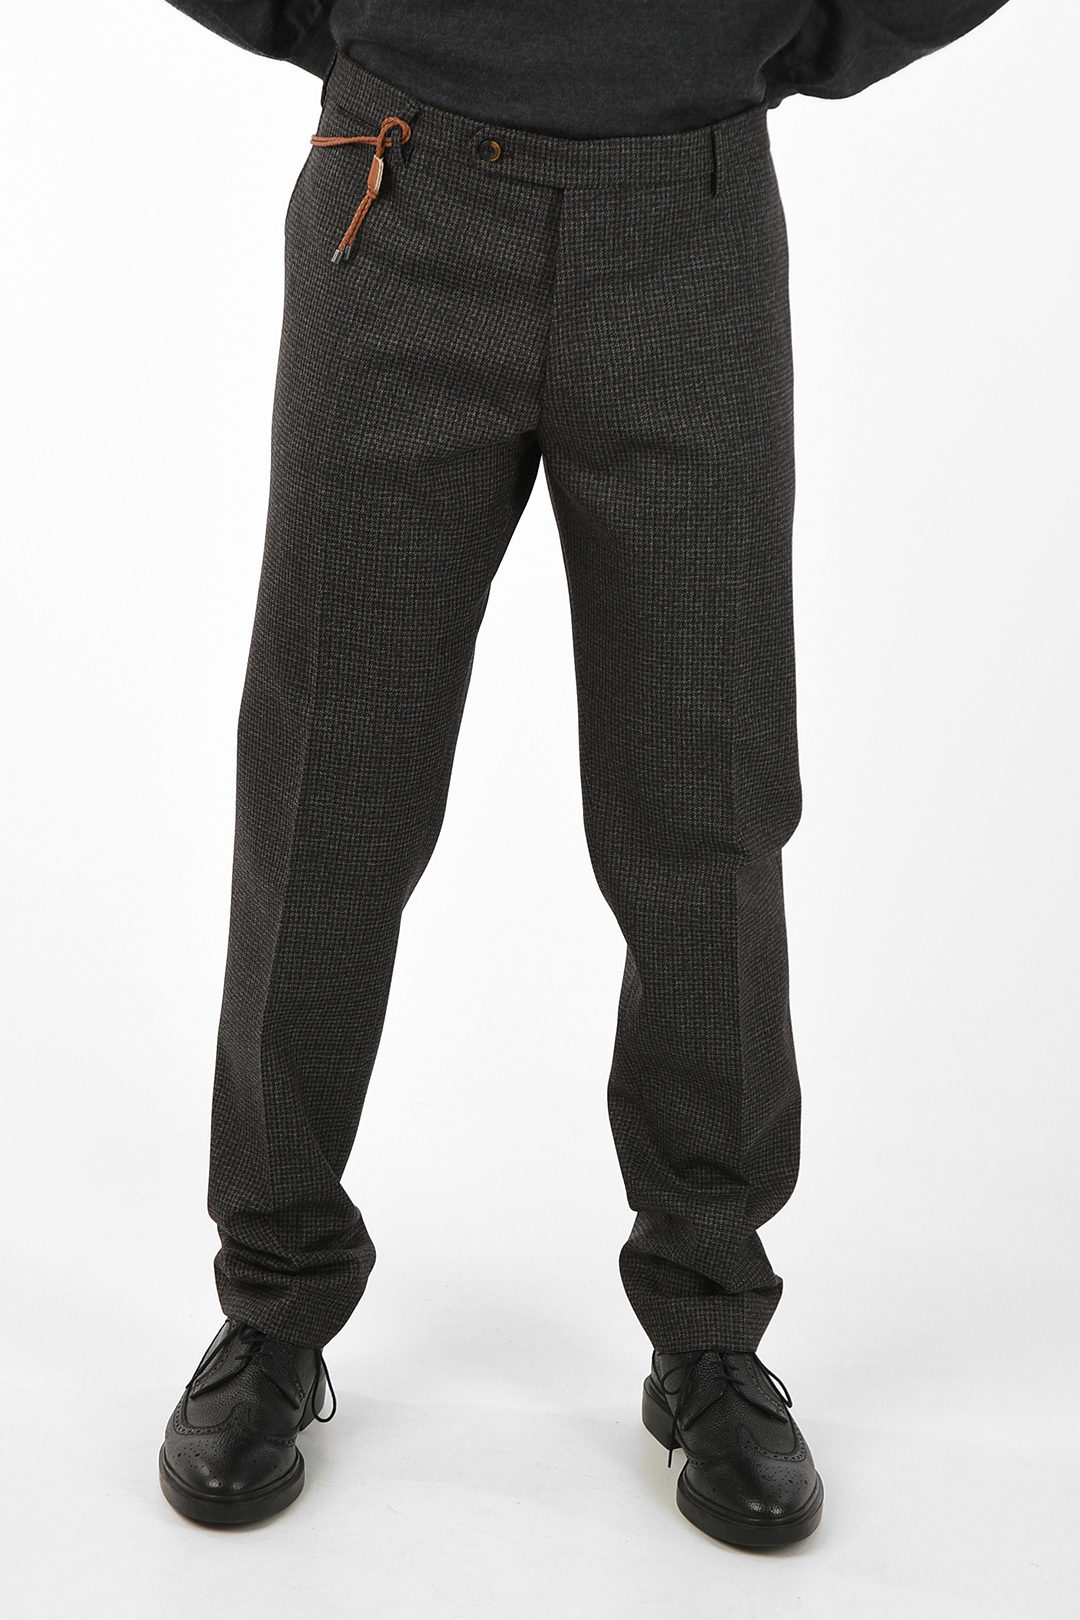 Berwich Virgin Wool 5 Pocket Pants with Belt Loops men - Glamood Outlet